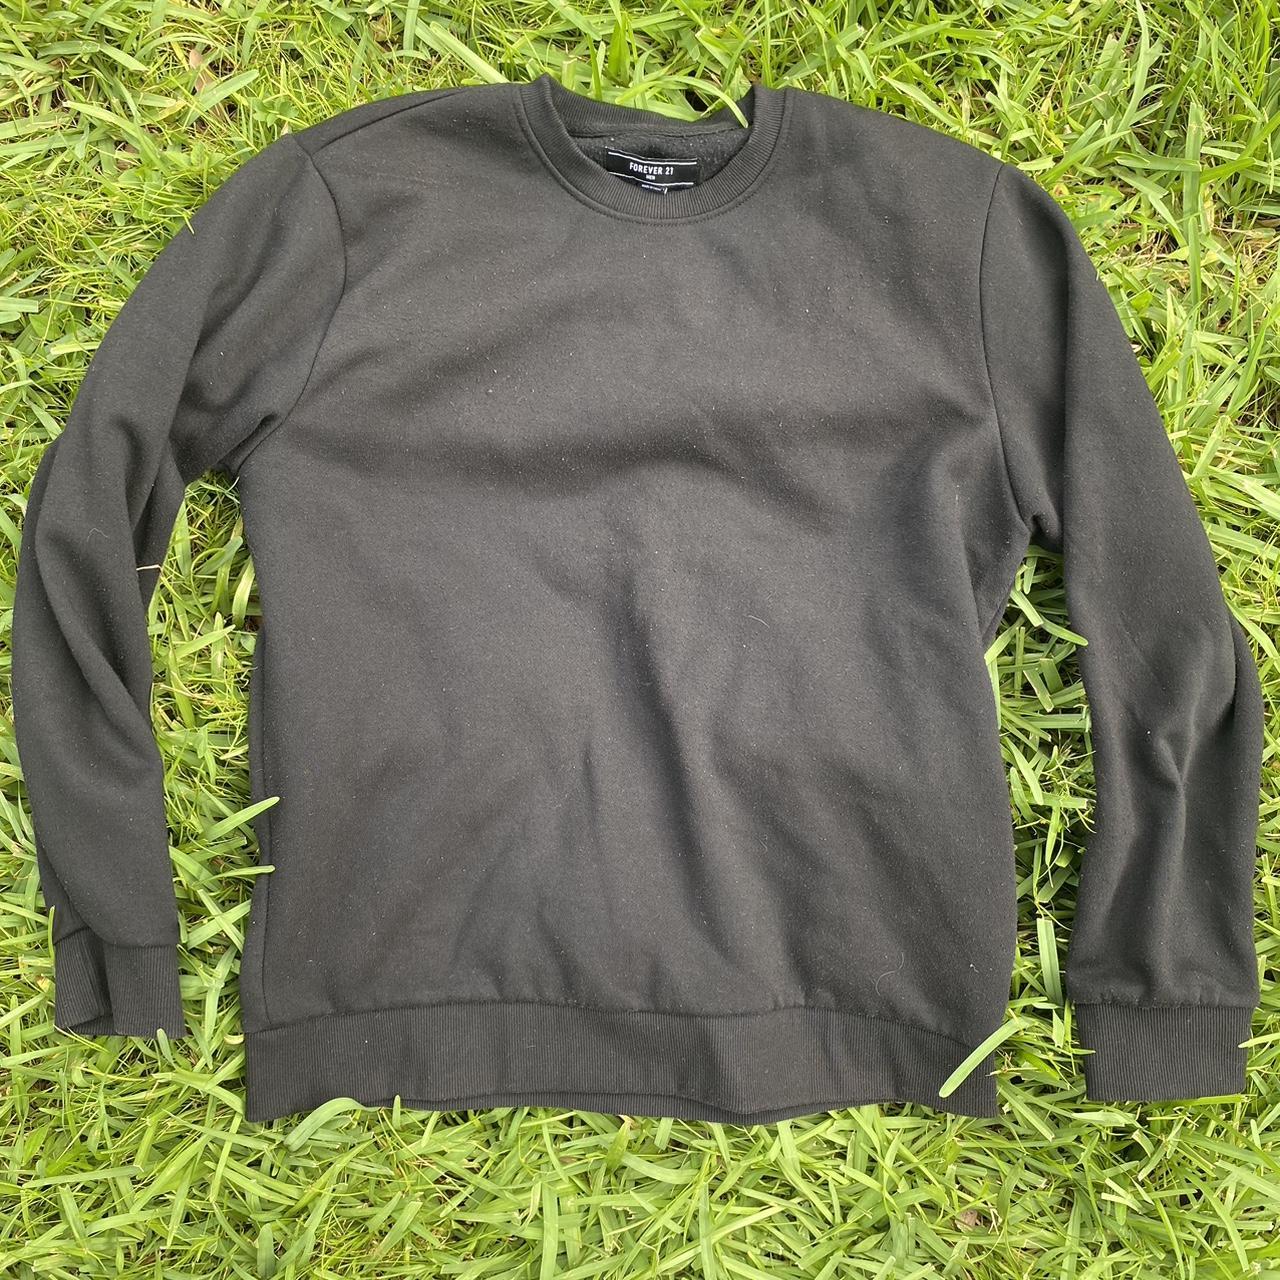 Black Forever 21 Crewneck Sweatshirt - Depop